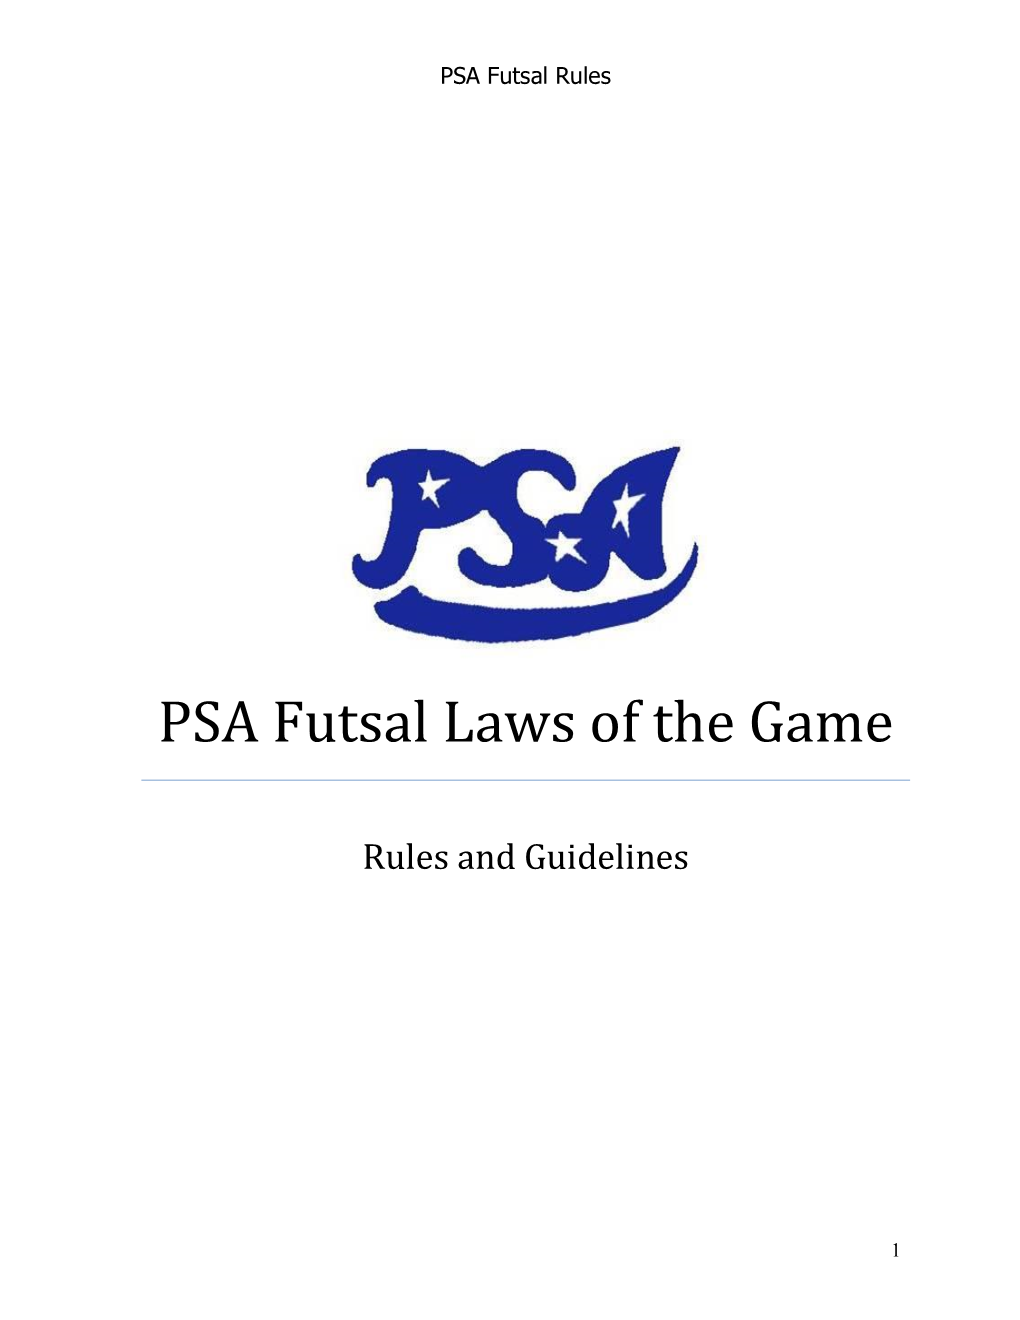 PSA Summer Futsal Rules